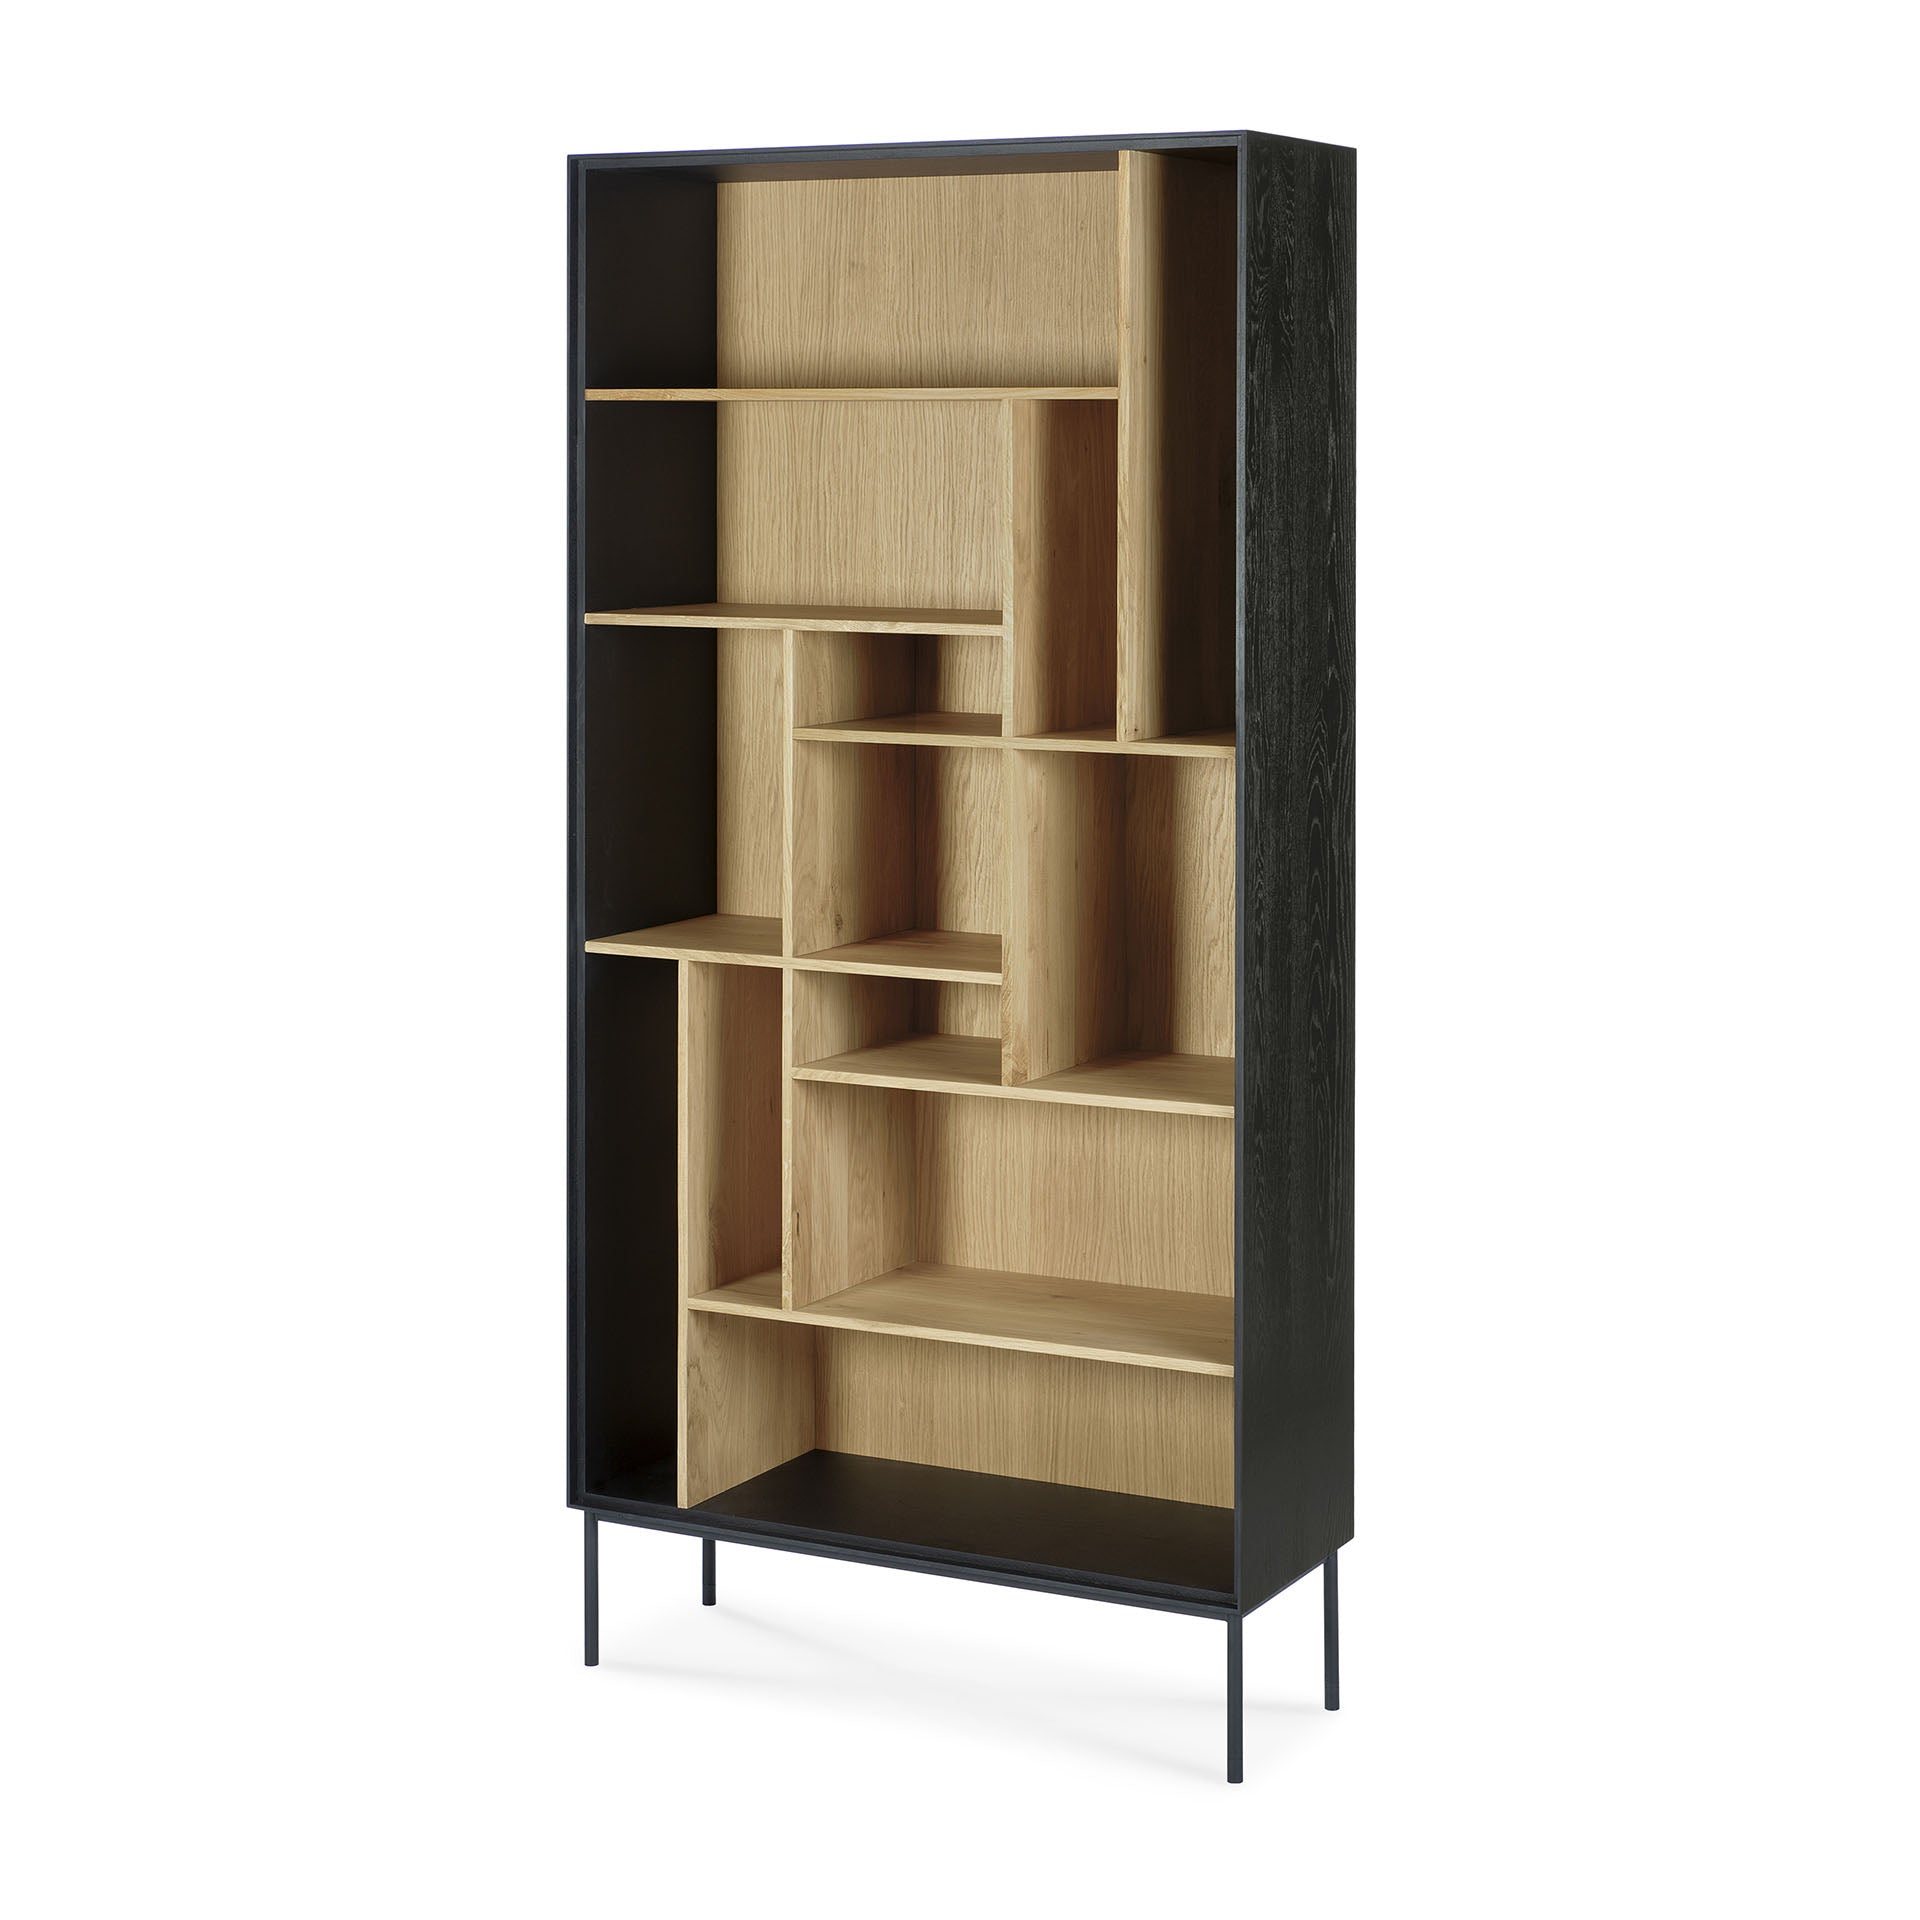 Ethnicraft Oak Blackbird Rack Bookcase Unit is available from Make Your House A Home, Bendigo, Victoria, Australia